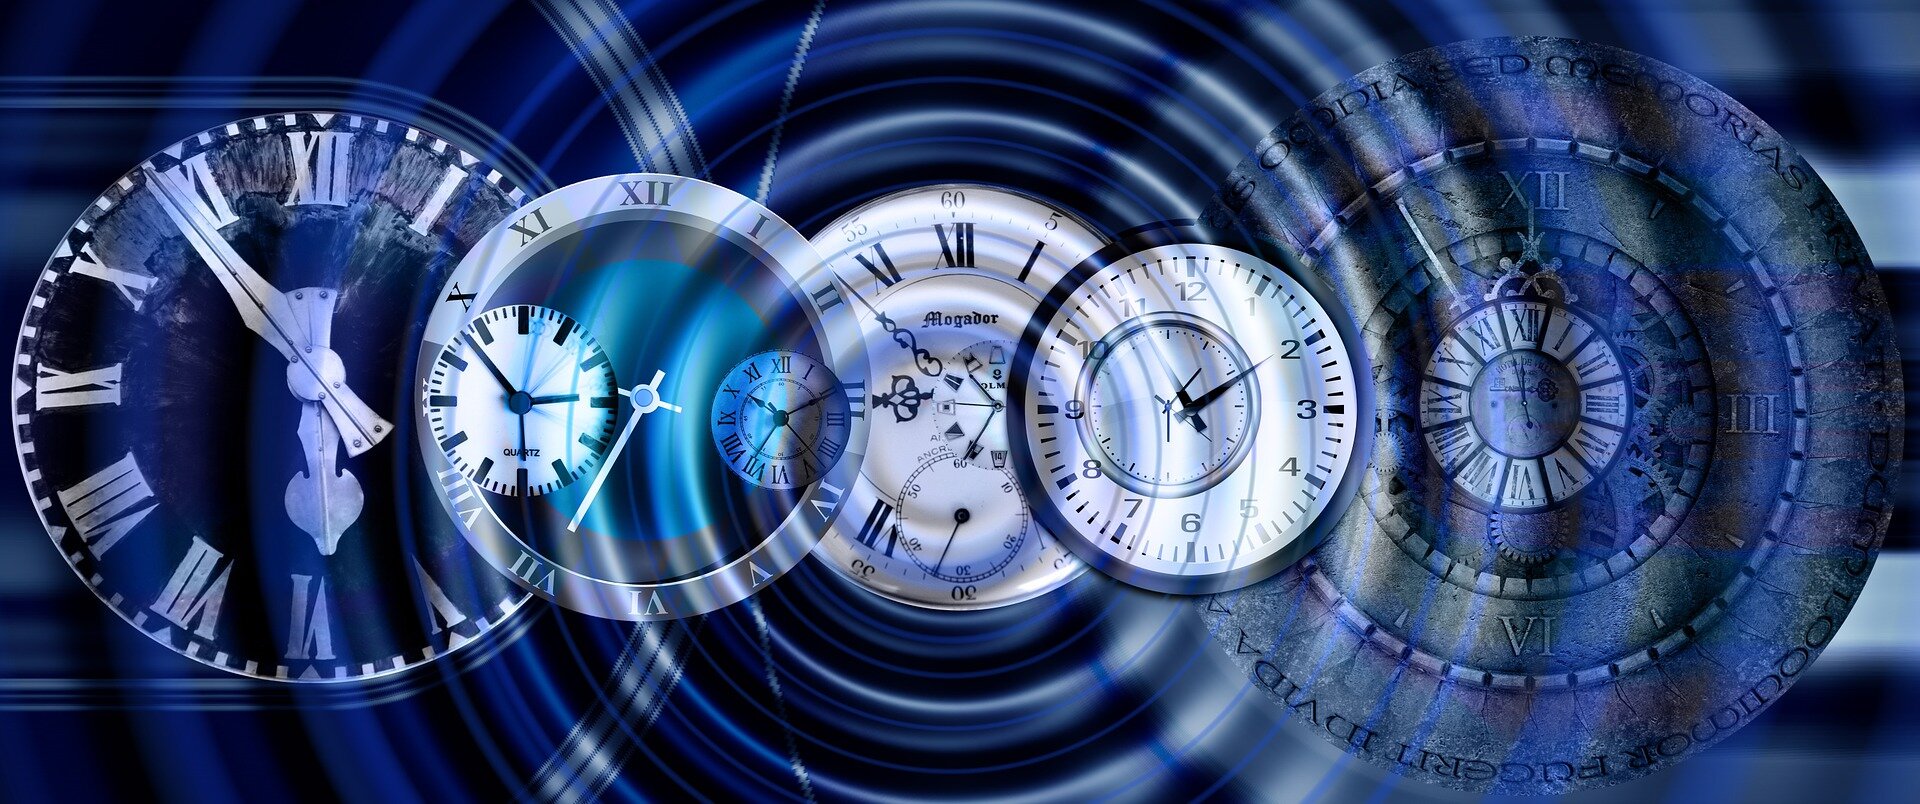 Движение во времени назад. Перемещение во времени и пространстве. Путешествие во времени. Часы "путешествие во времени". Перемещение вовременни.